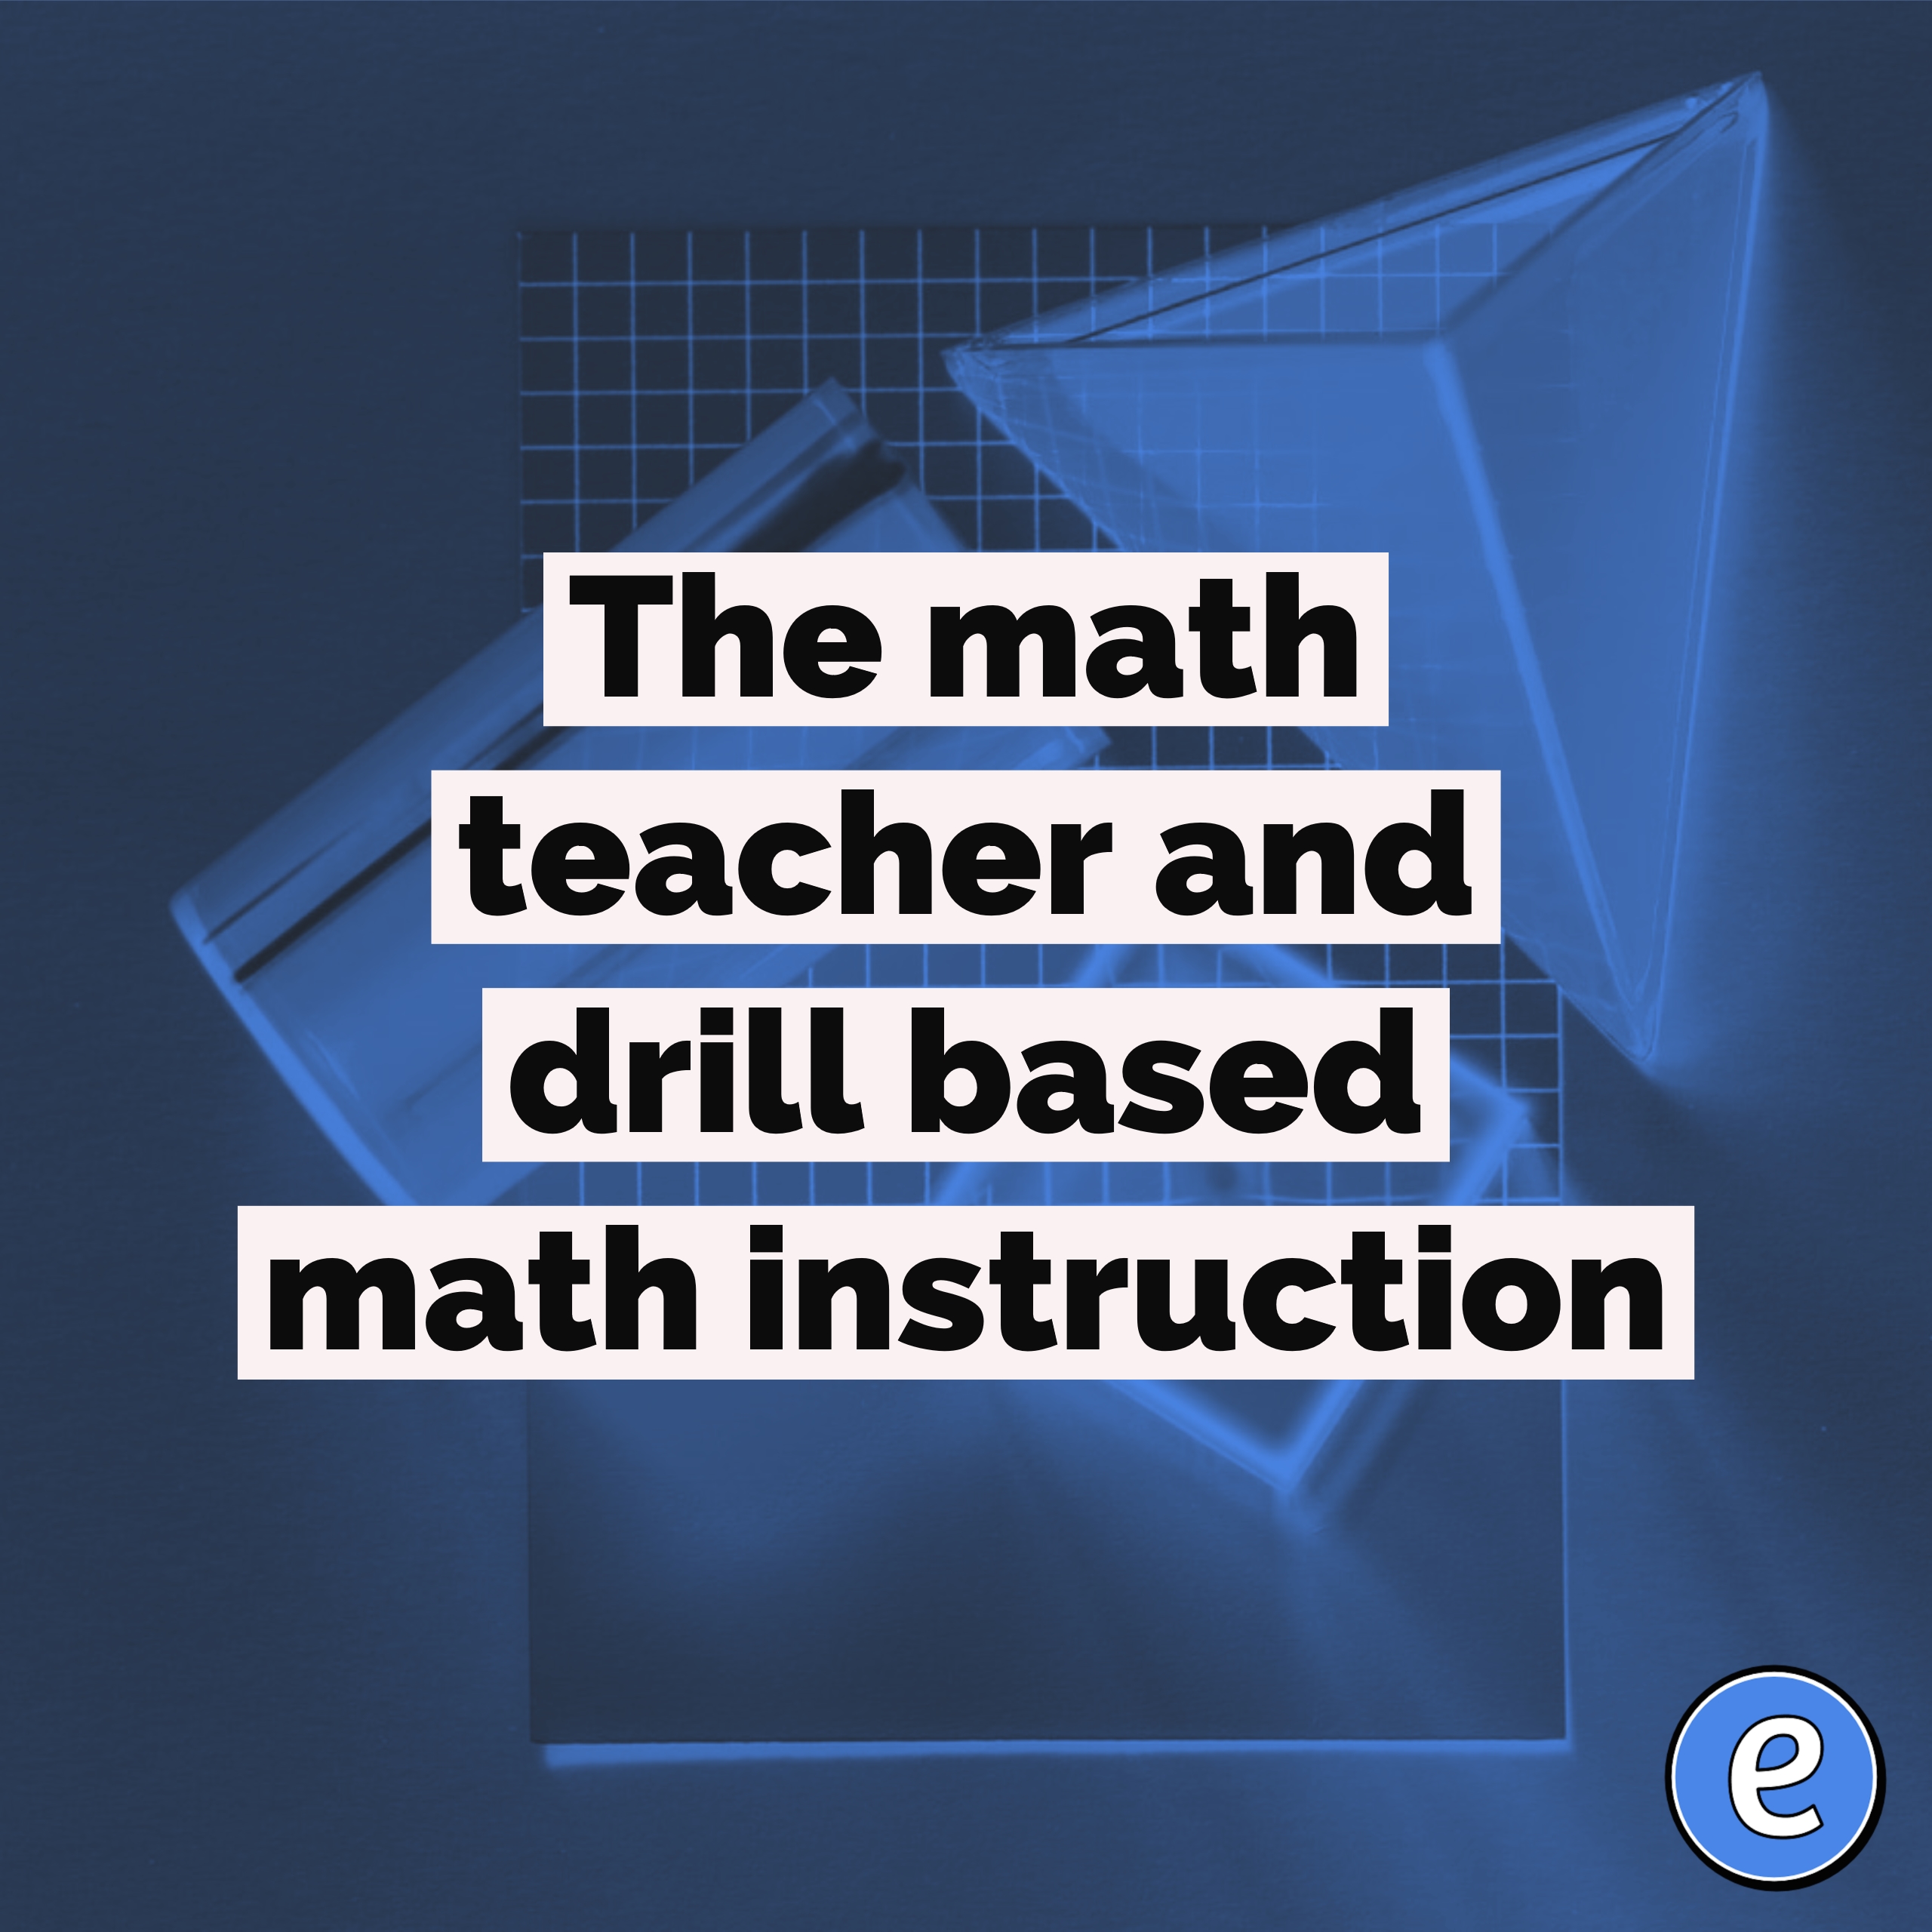 The math teacher and drill based math instruction